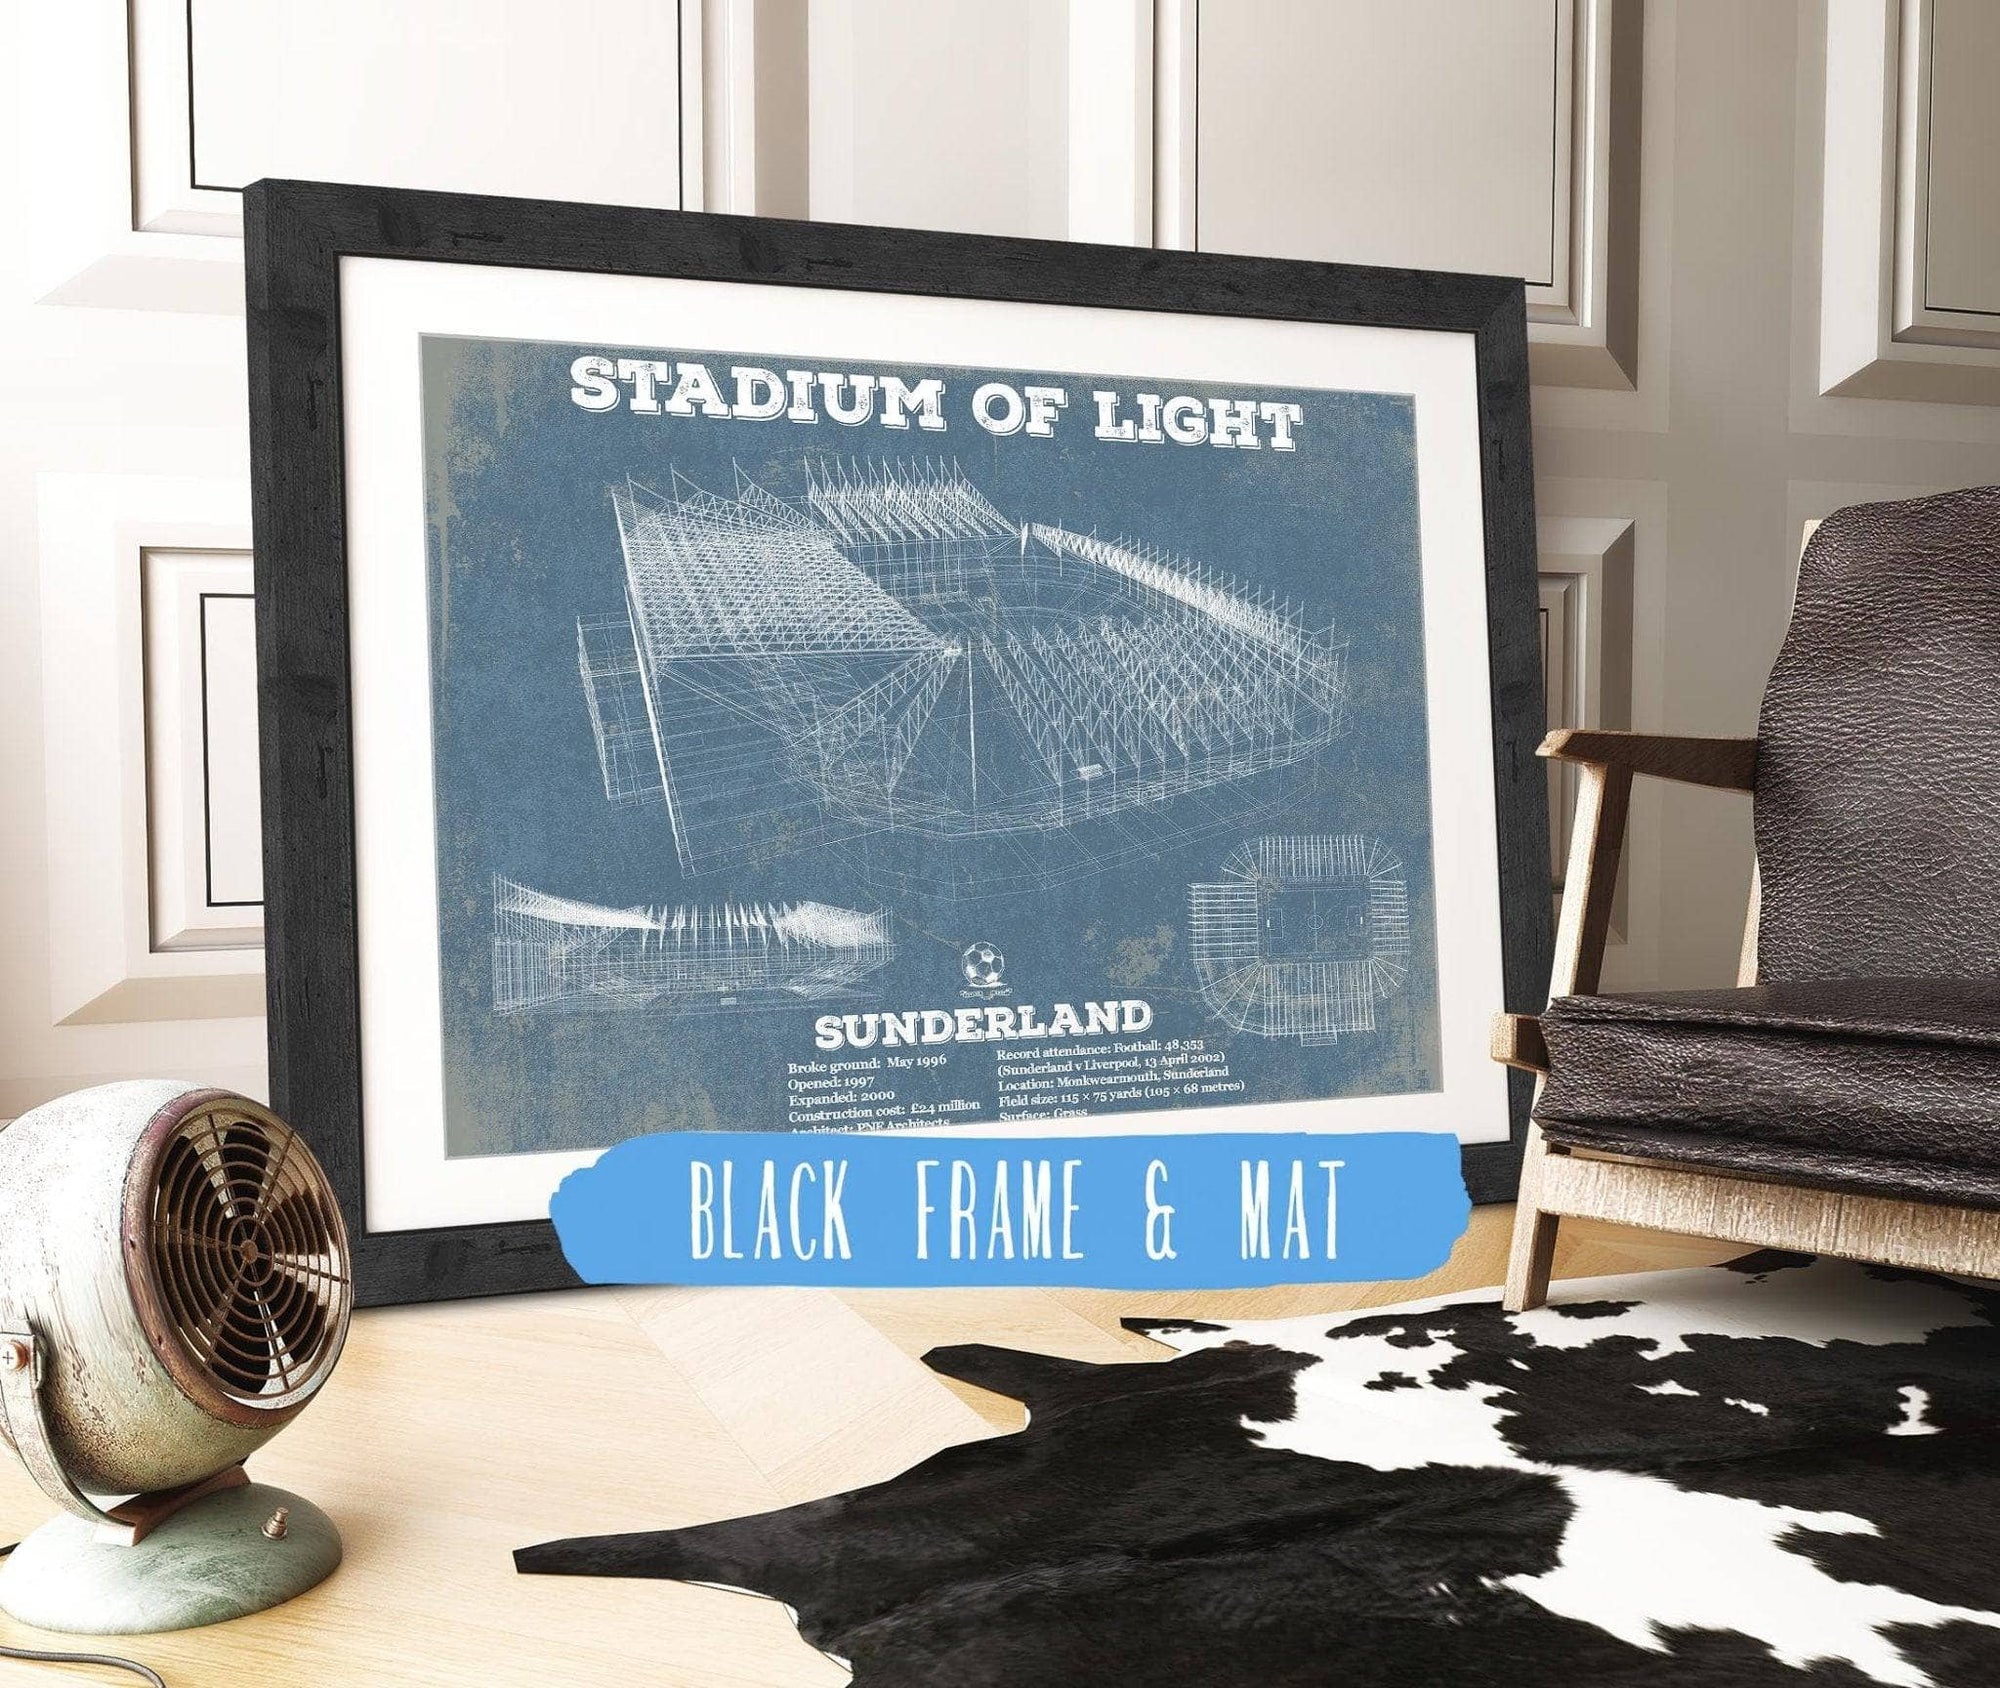 Cutler West Soccer Collection 14" x 11" / Black Frame & Mat Sunderland AFC Stadium Of Light Soccer Print 845000162_31052